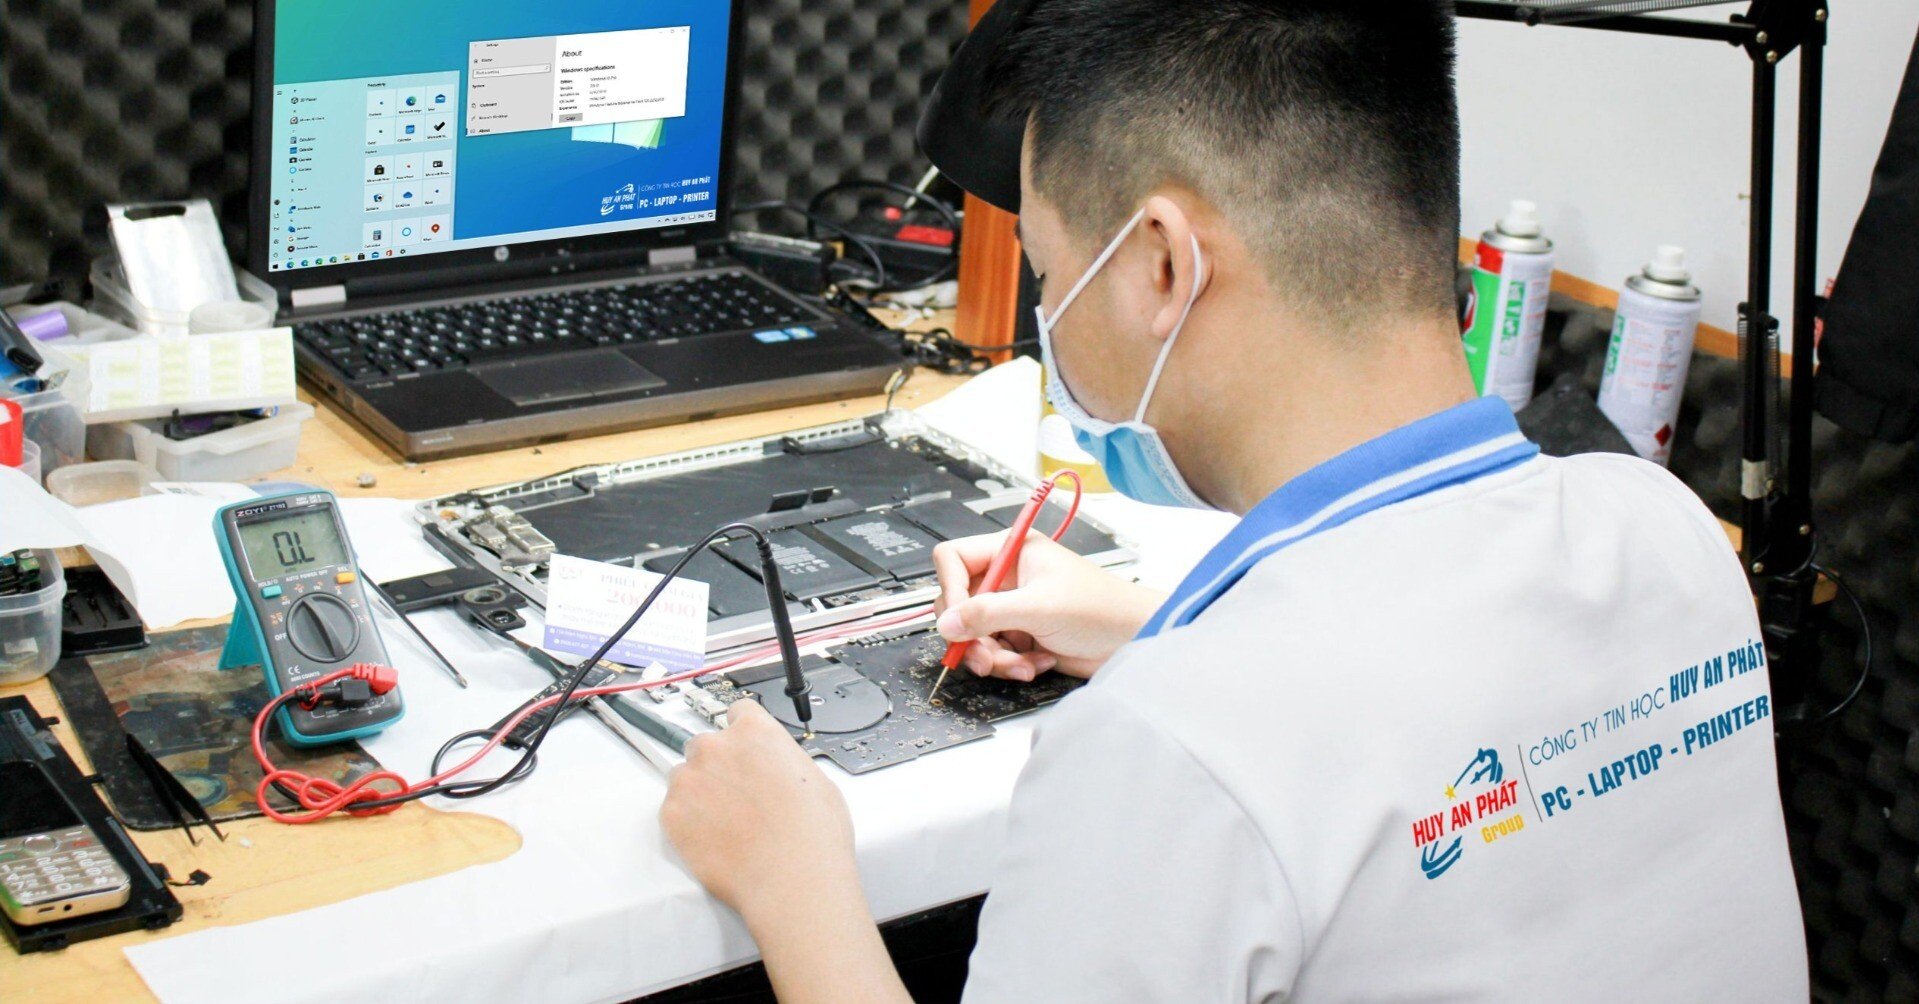 Sửa máy tính TpHCM - Huy An Phát Group